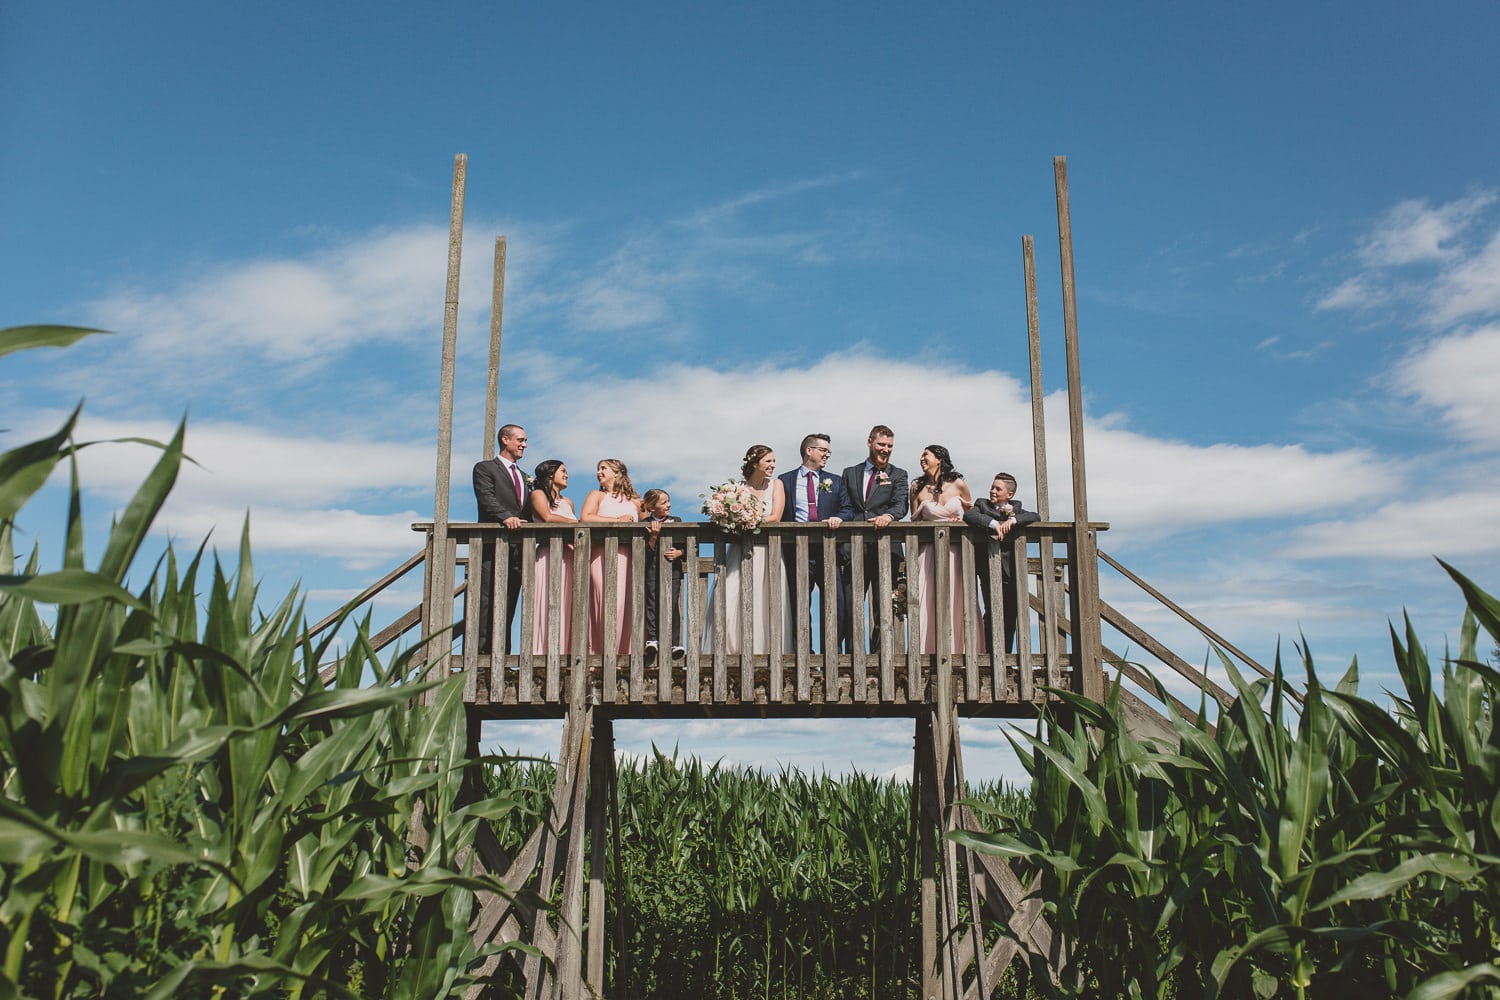 cornfield at hopcott farms wedding party portrait